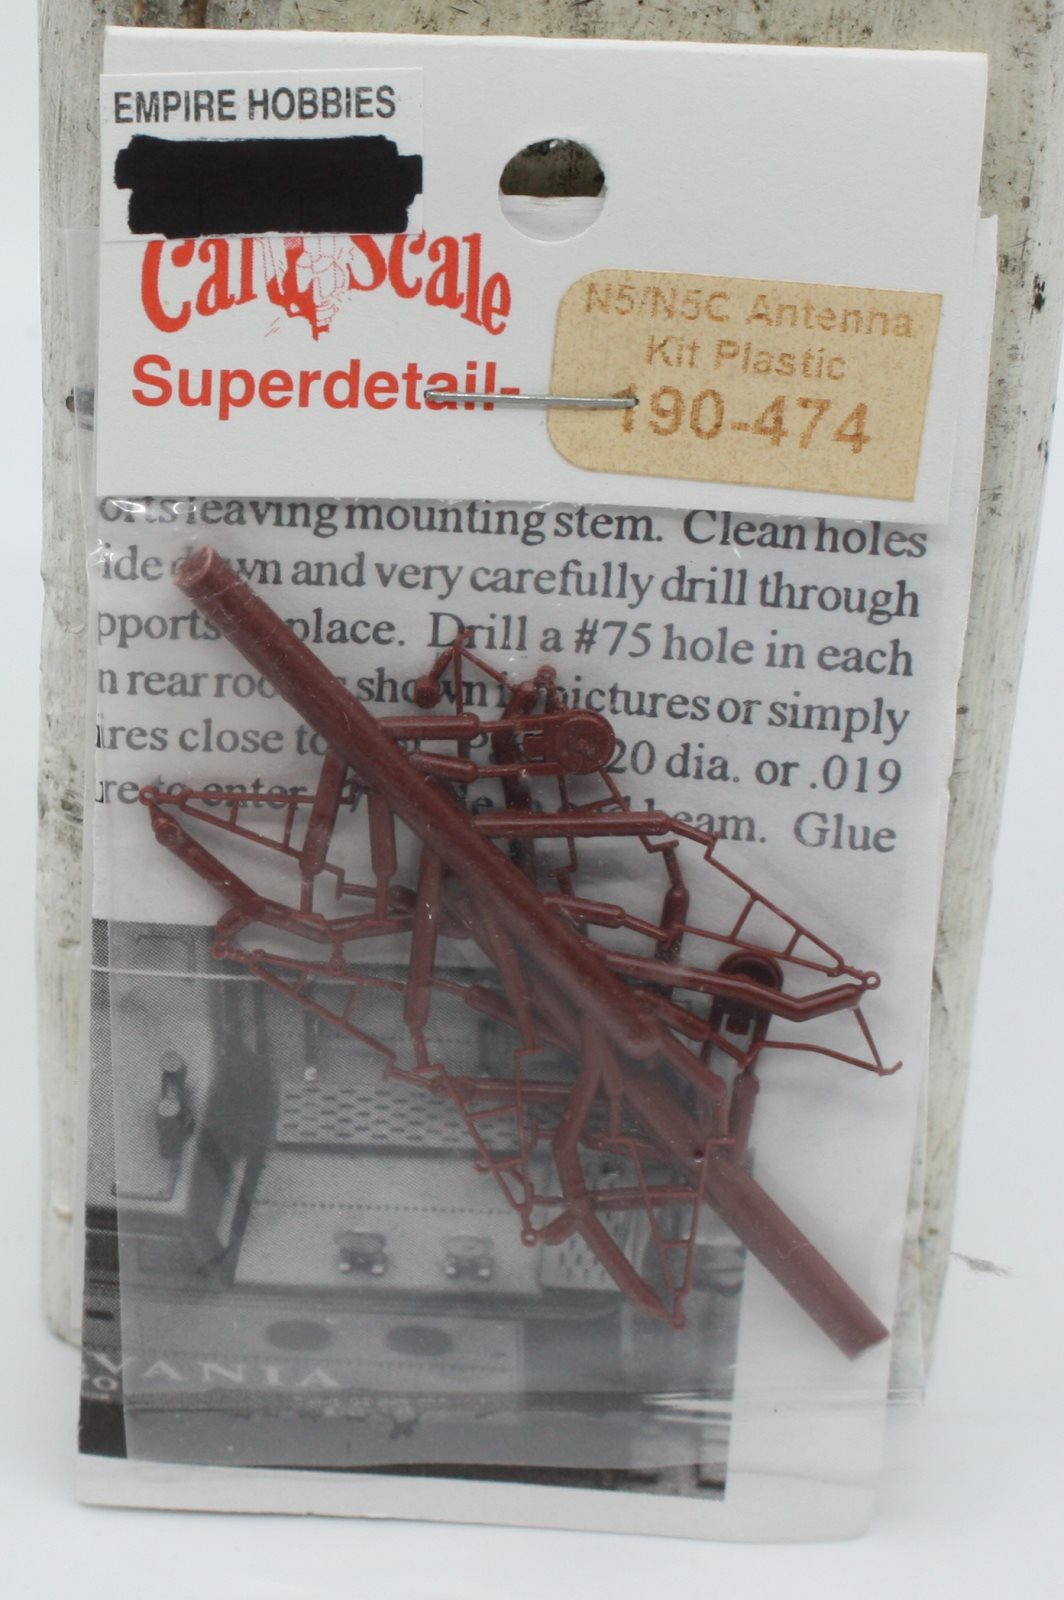 Cal Scale 190-474 HO N5/N5C Antenna Kit Plastic